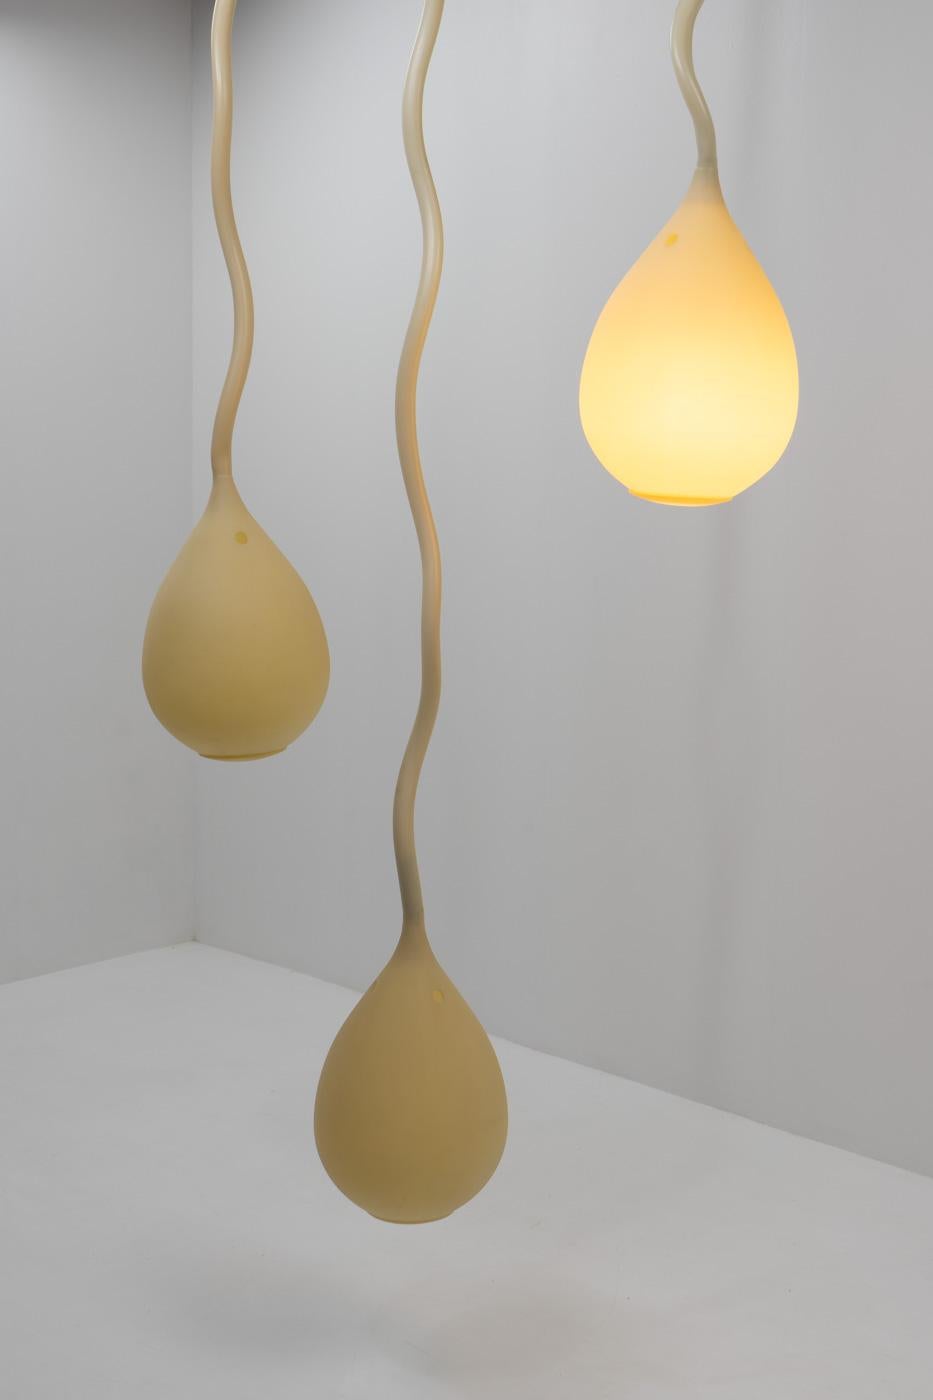 Rare Swiss Design Jingzi Ceiling Lamps, Herzog & De Meuron, for Belux, 2000s For Sale 4